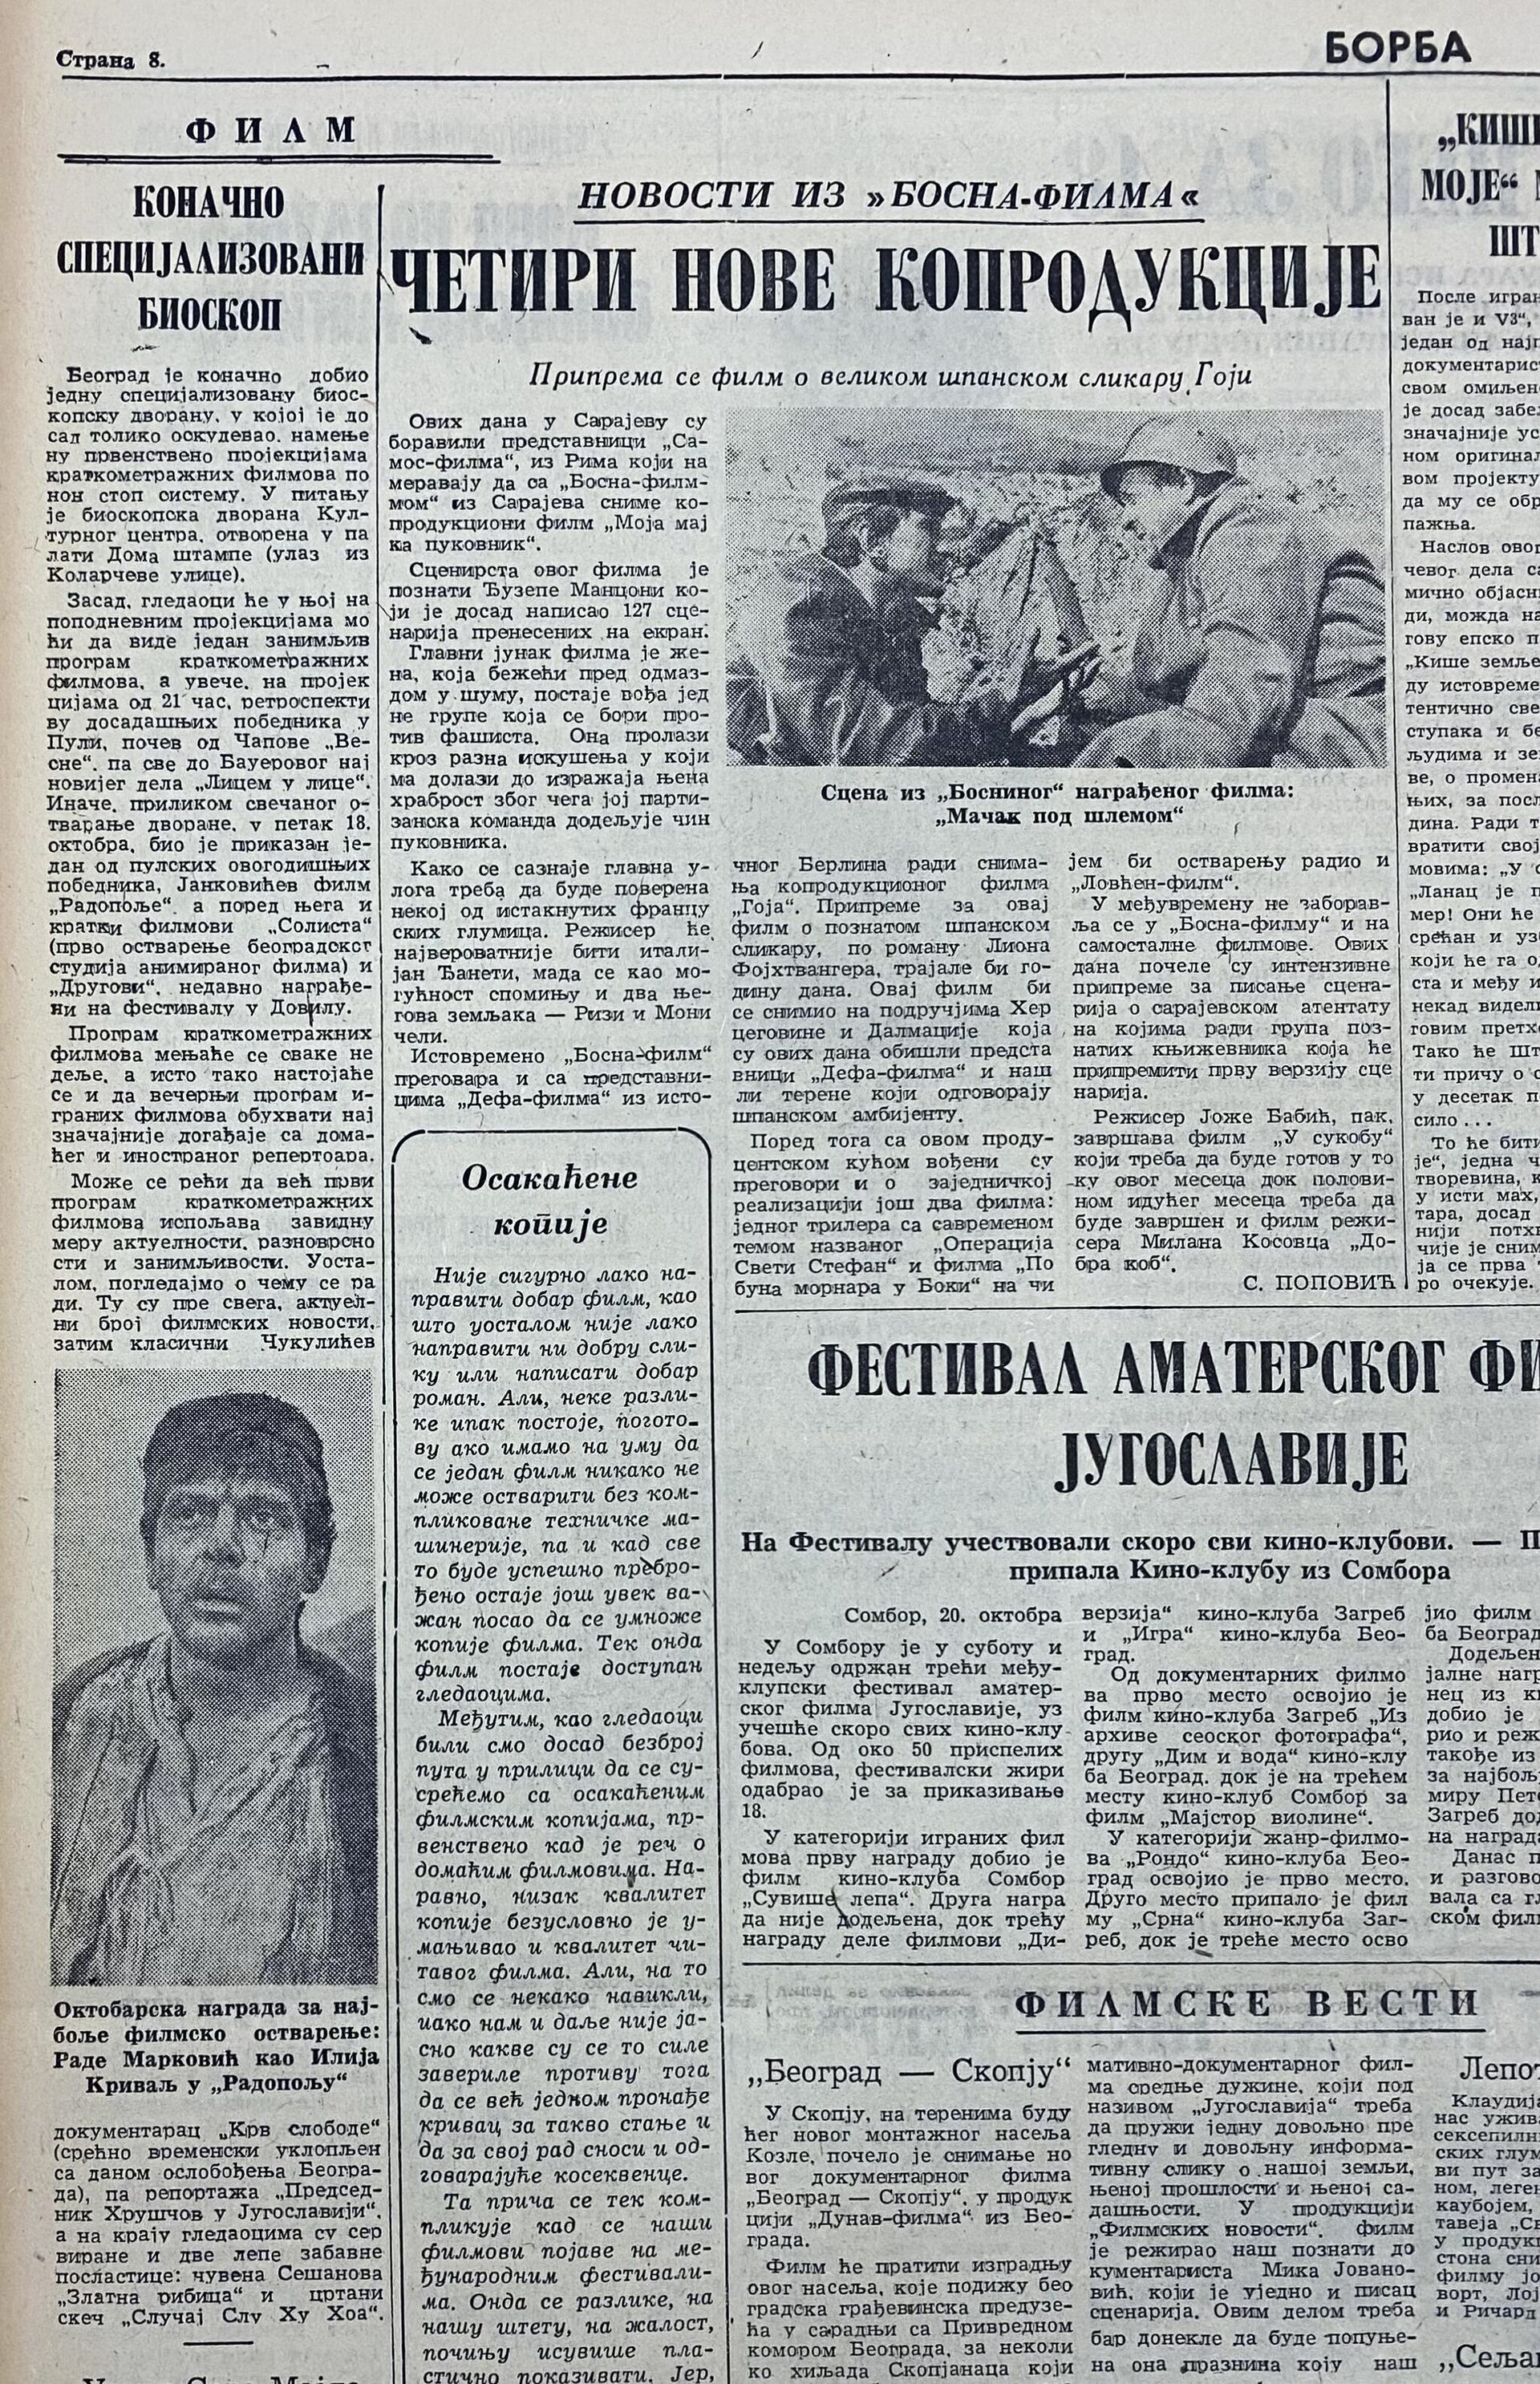 Borba, 21. okt 1963., iz arhive Biblioteke grada Beograda - Sputnik Srbija, 1920, 19.10.2023